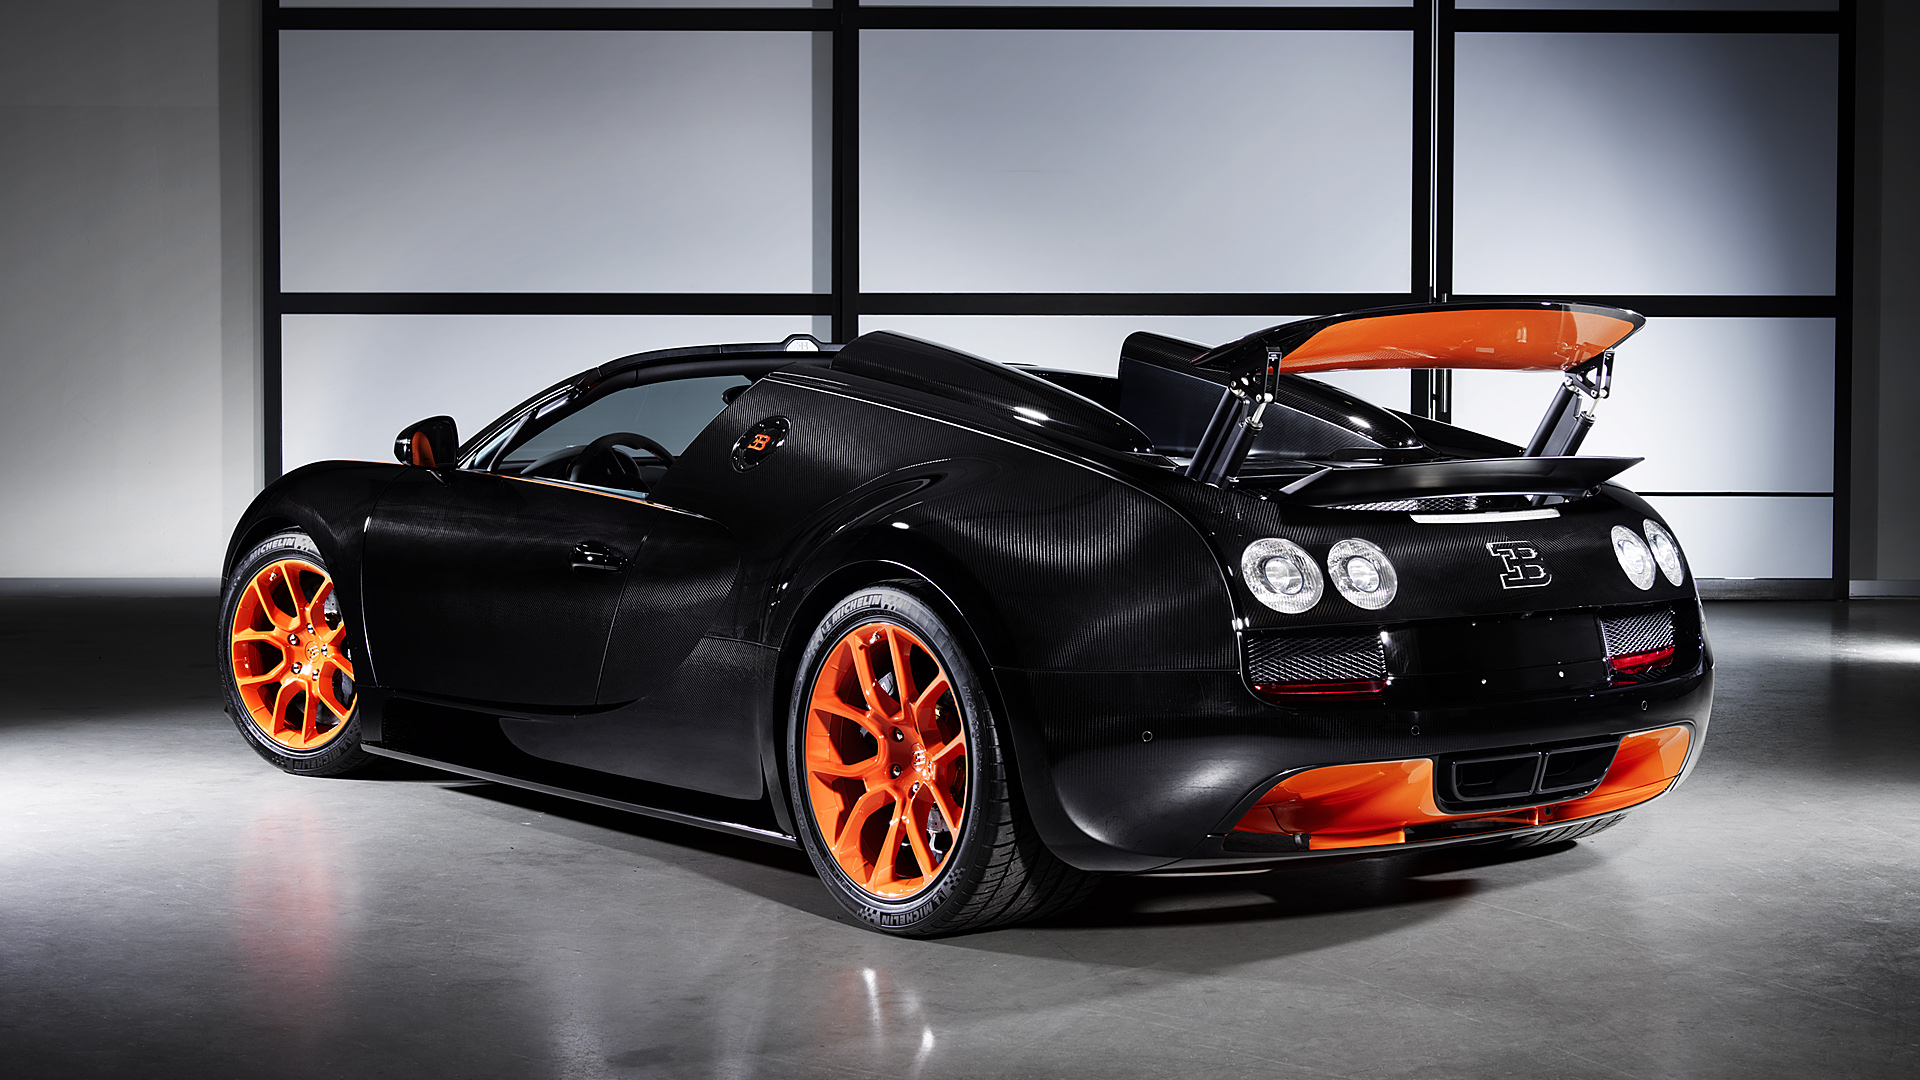 2013 Bugatti Veyron Sport Vitesse World Speed Record V3 1080p - 9to5